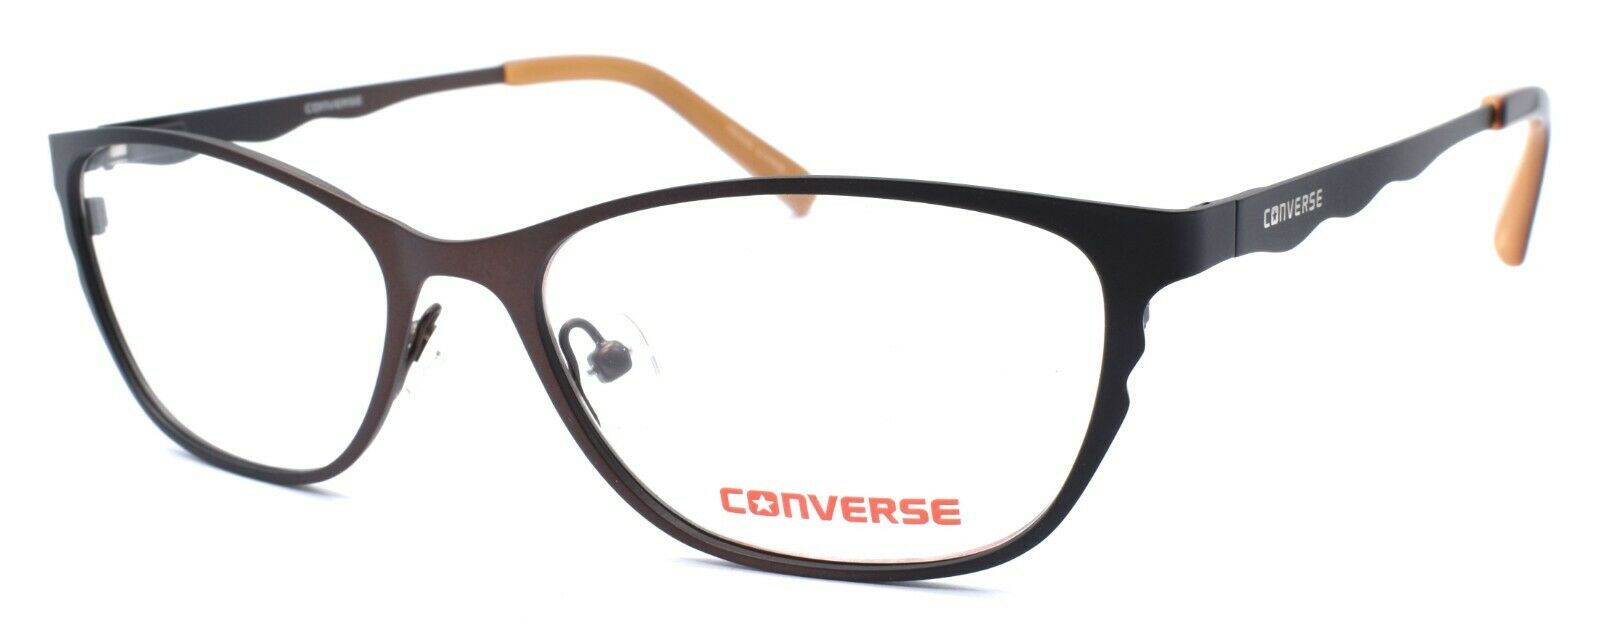 1-CONVERSE K200 Kids Girls Eyeglasses Frames 50-16-135 Brown + CASE-751286294712-IKSpecs